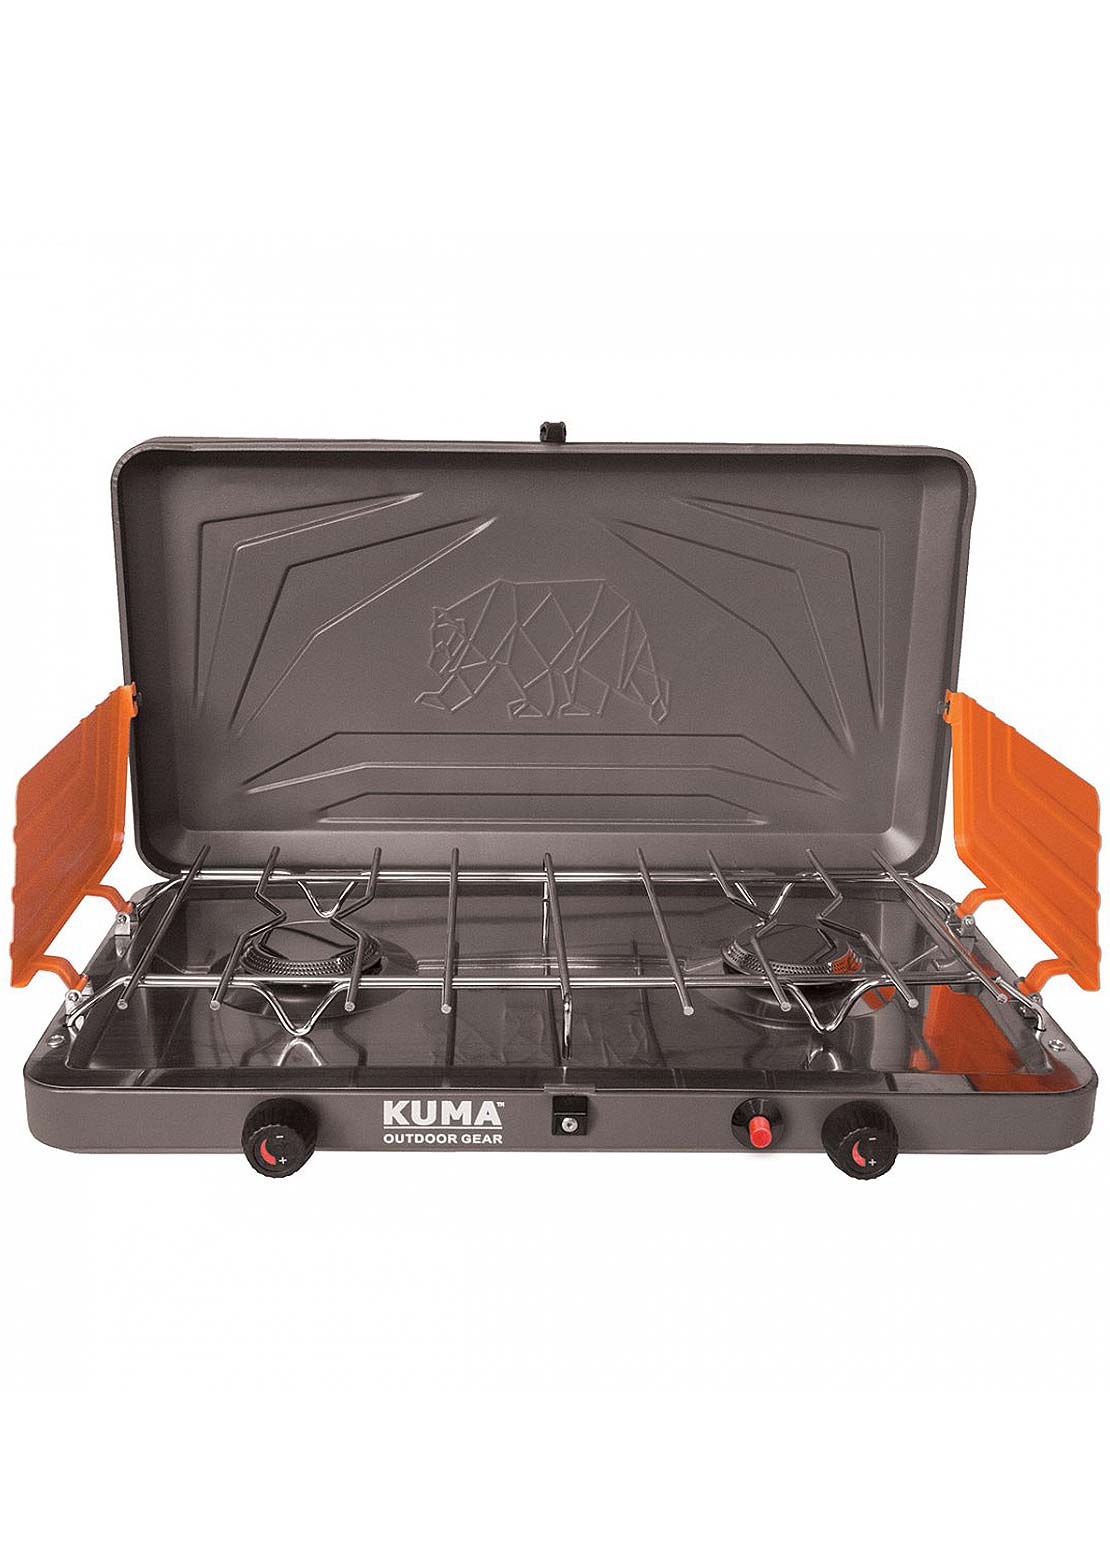 Kuma Outdoor Gear Deluxe 2 Burner Propane Stove